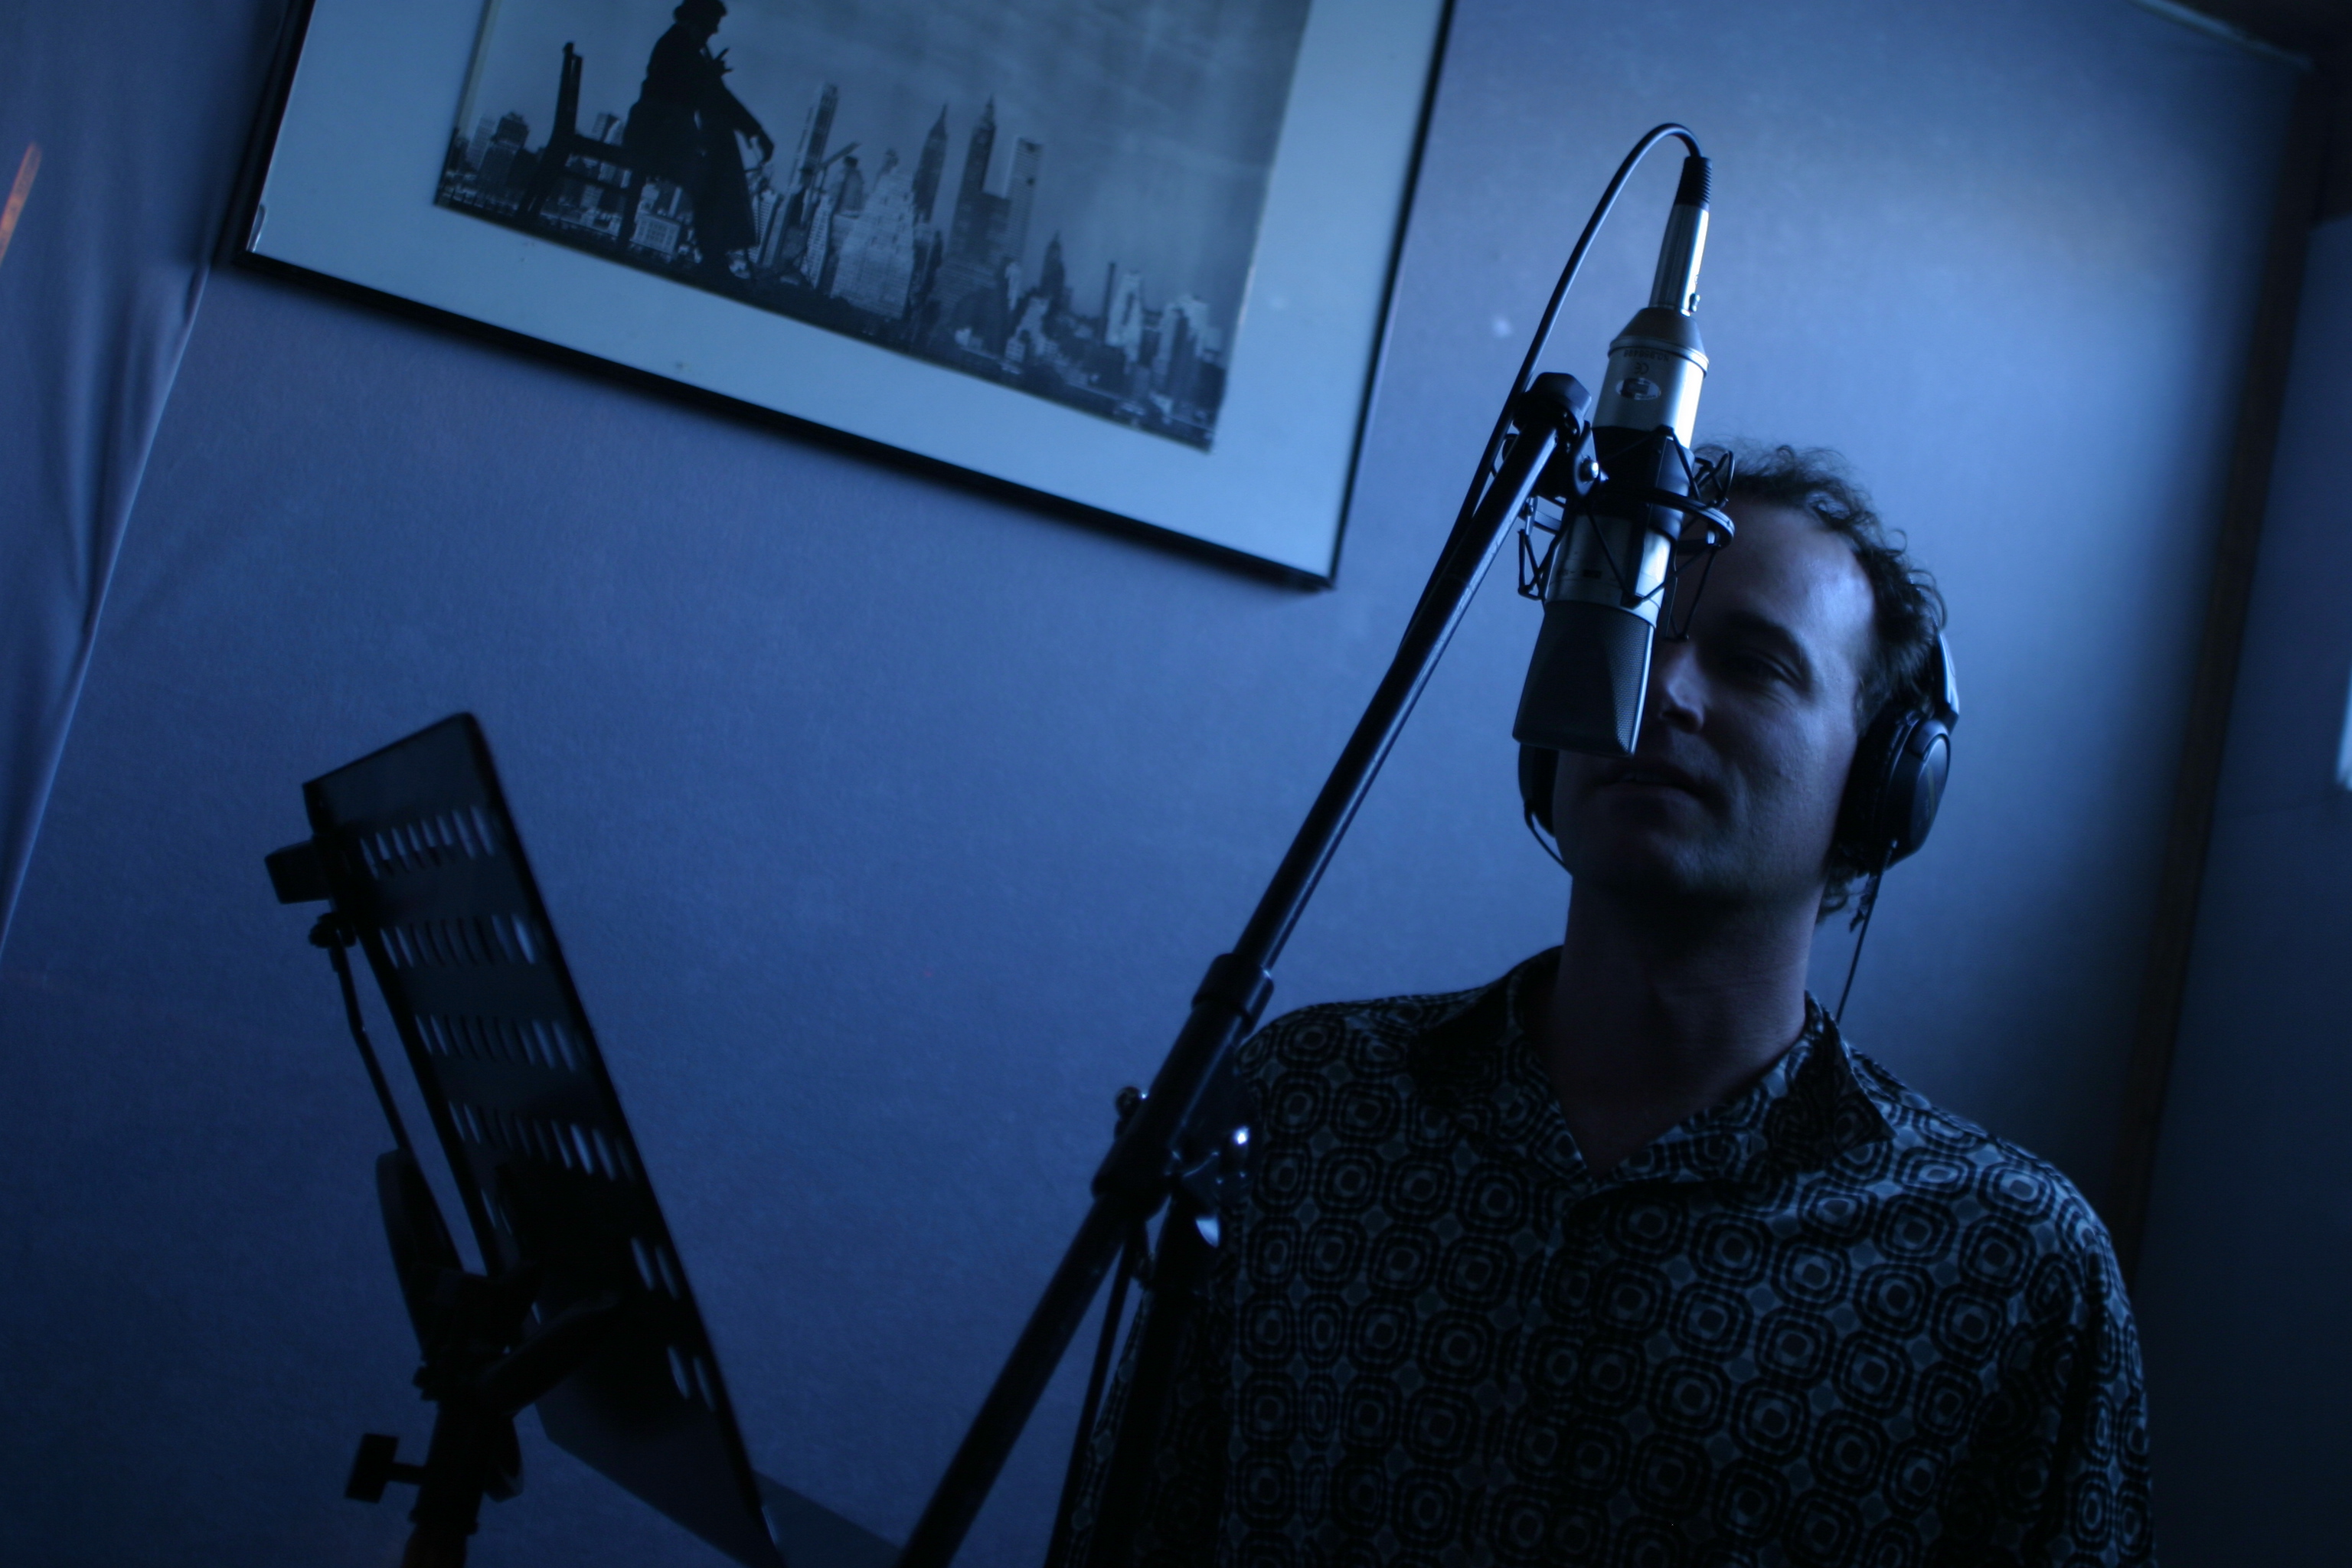 recording in The Hut